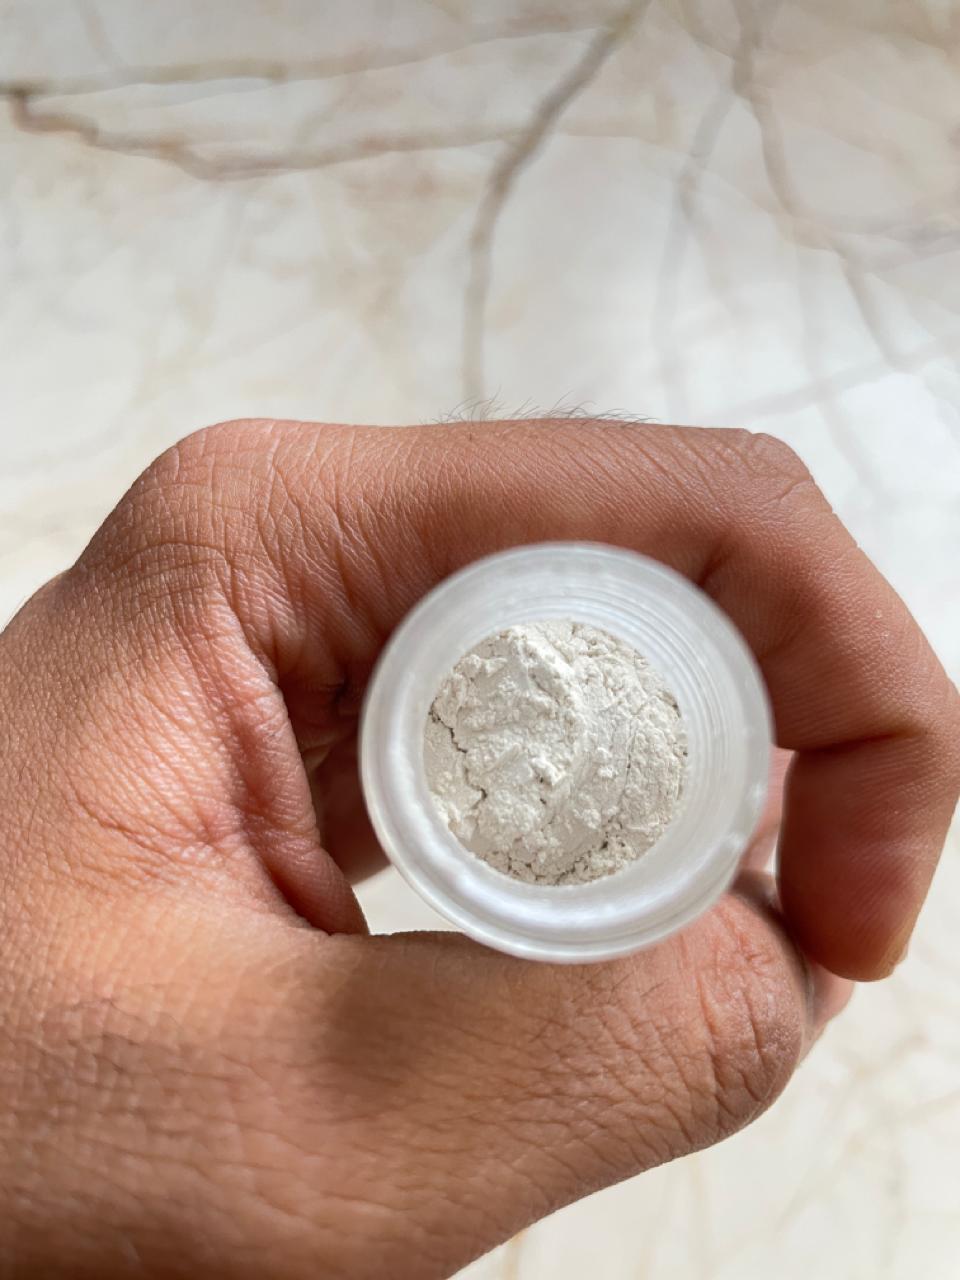 White Pearl Pigment Powder